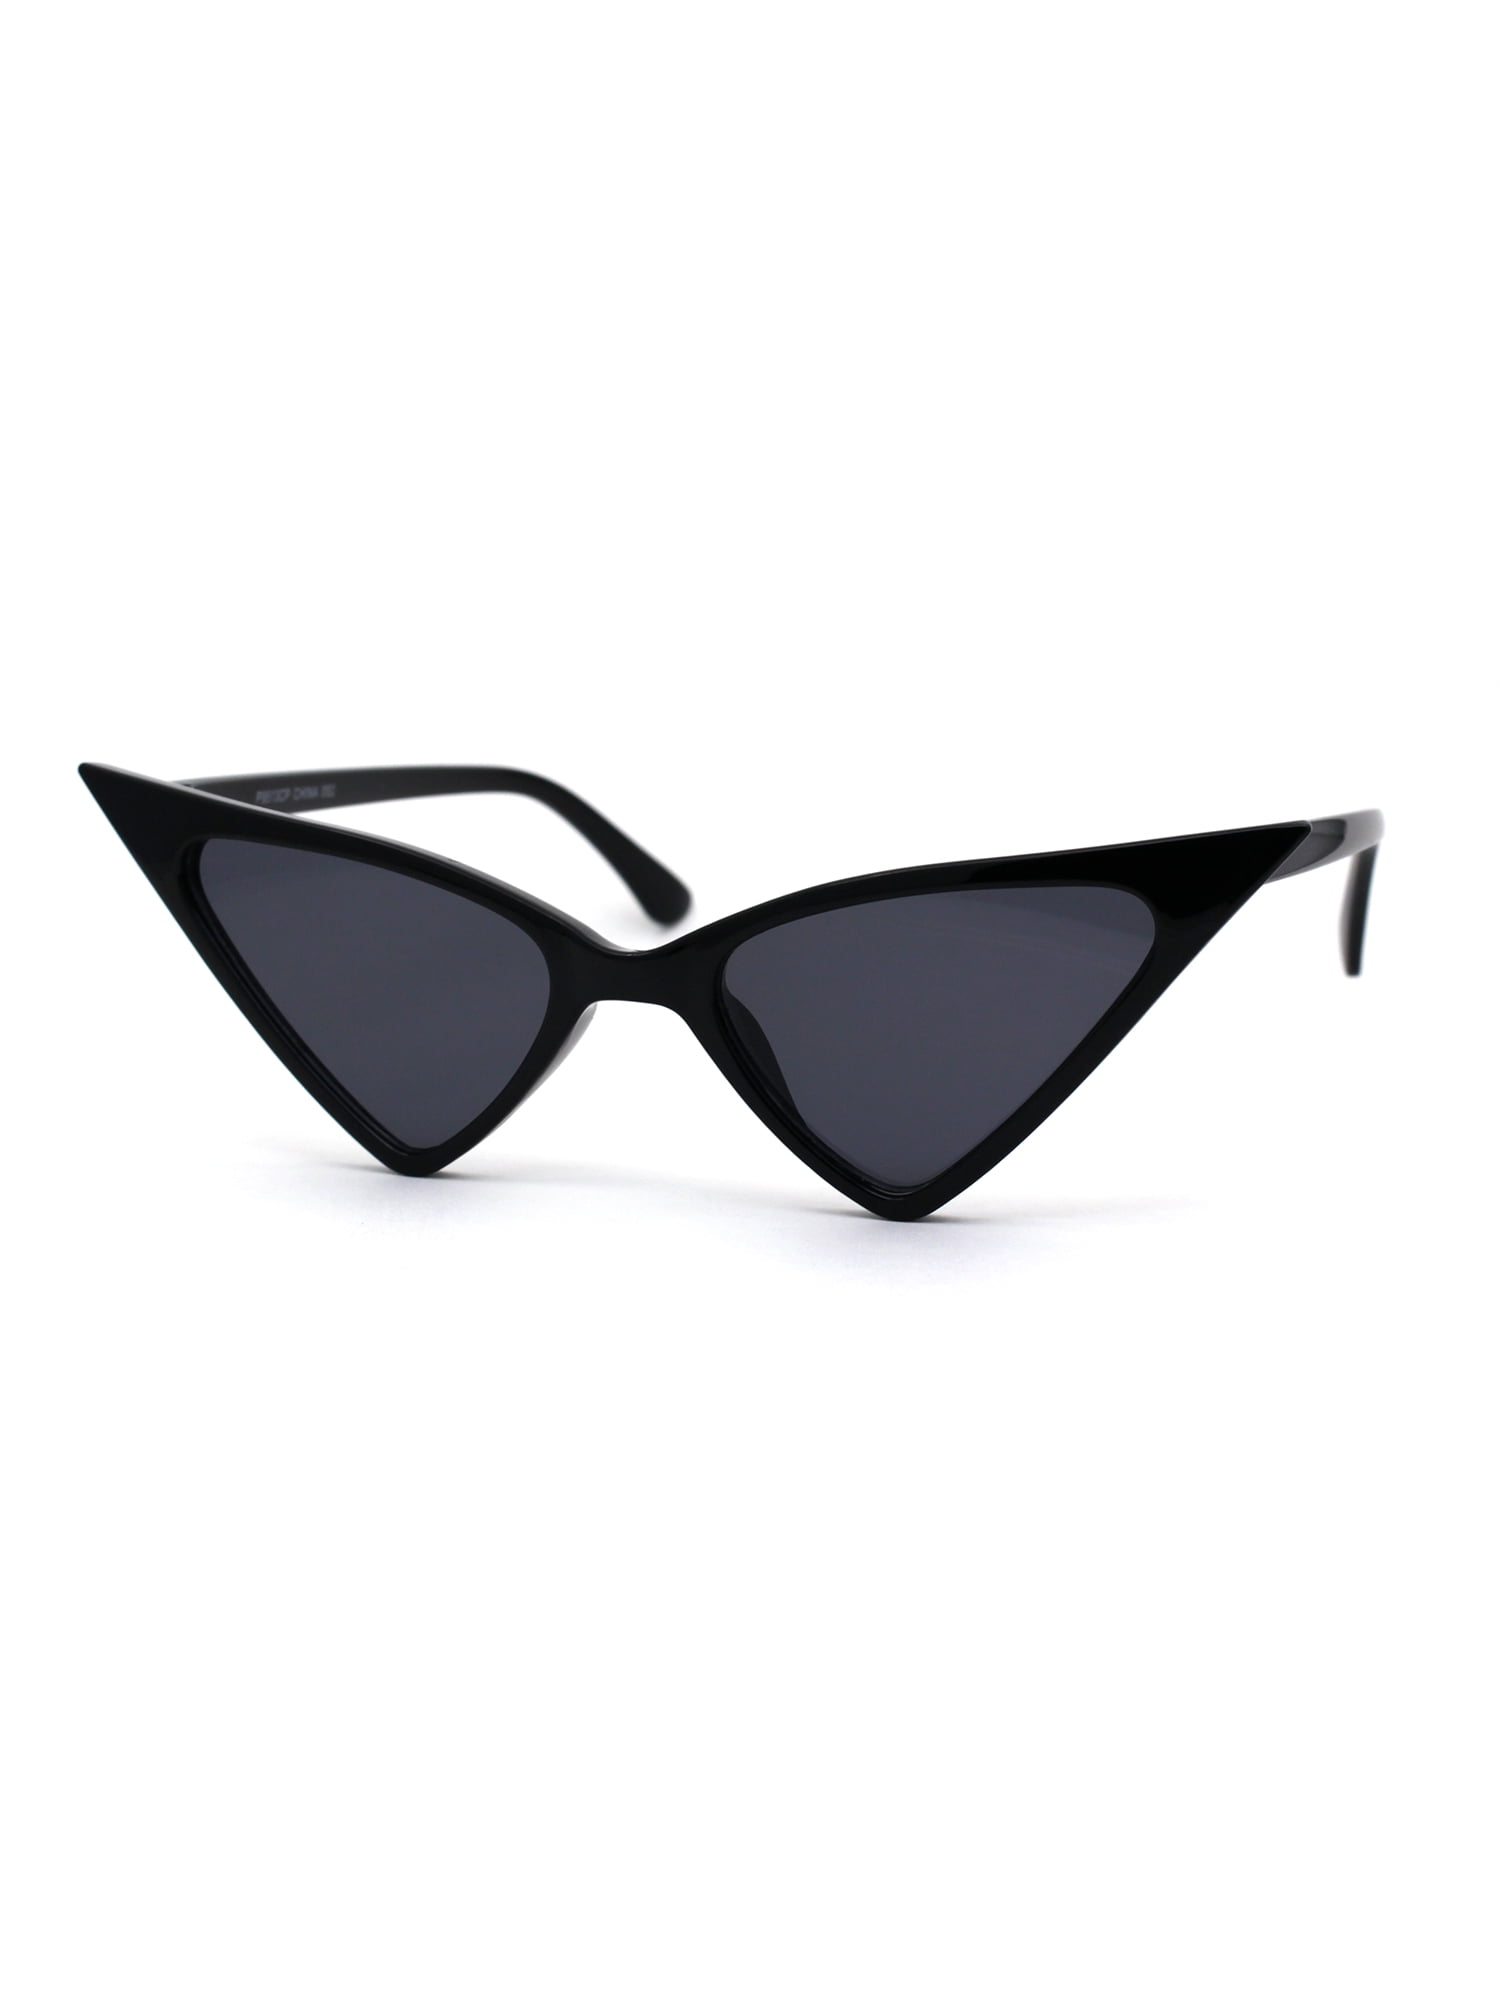 Black Vintage Cat Eye Cateye Shaped Sunglasses Classy Glasses Free Case S088 